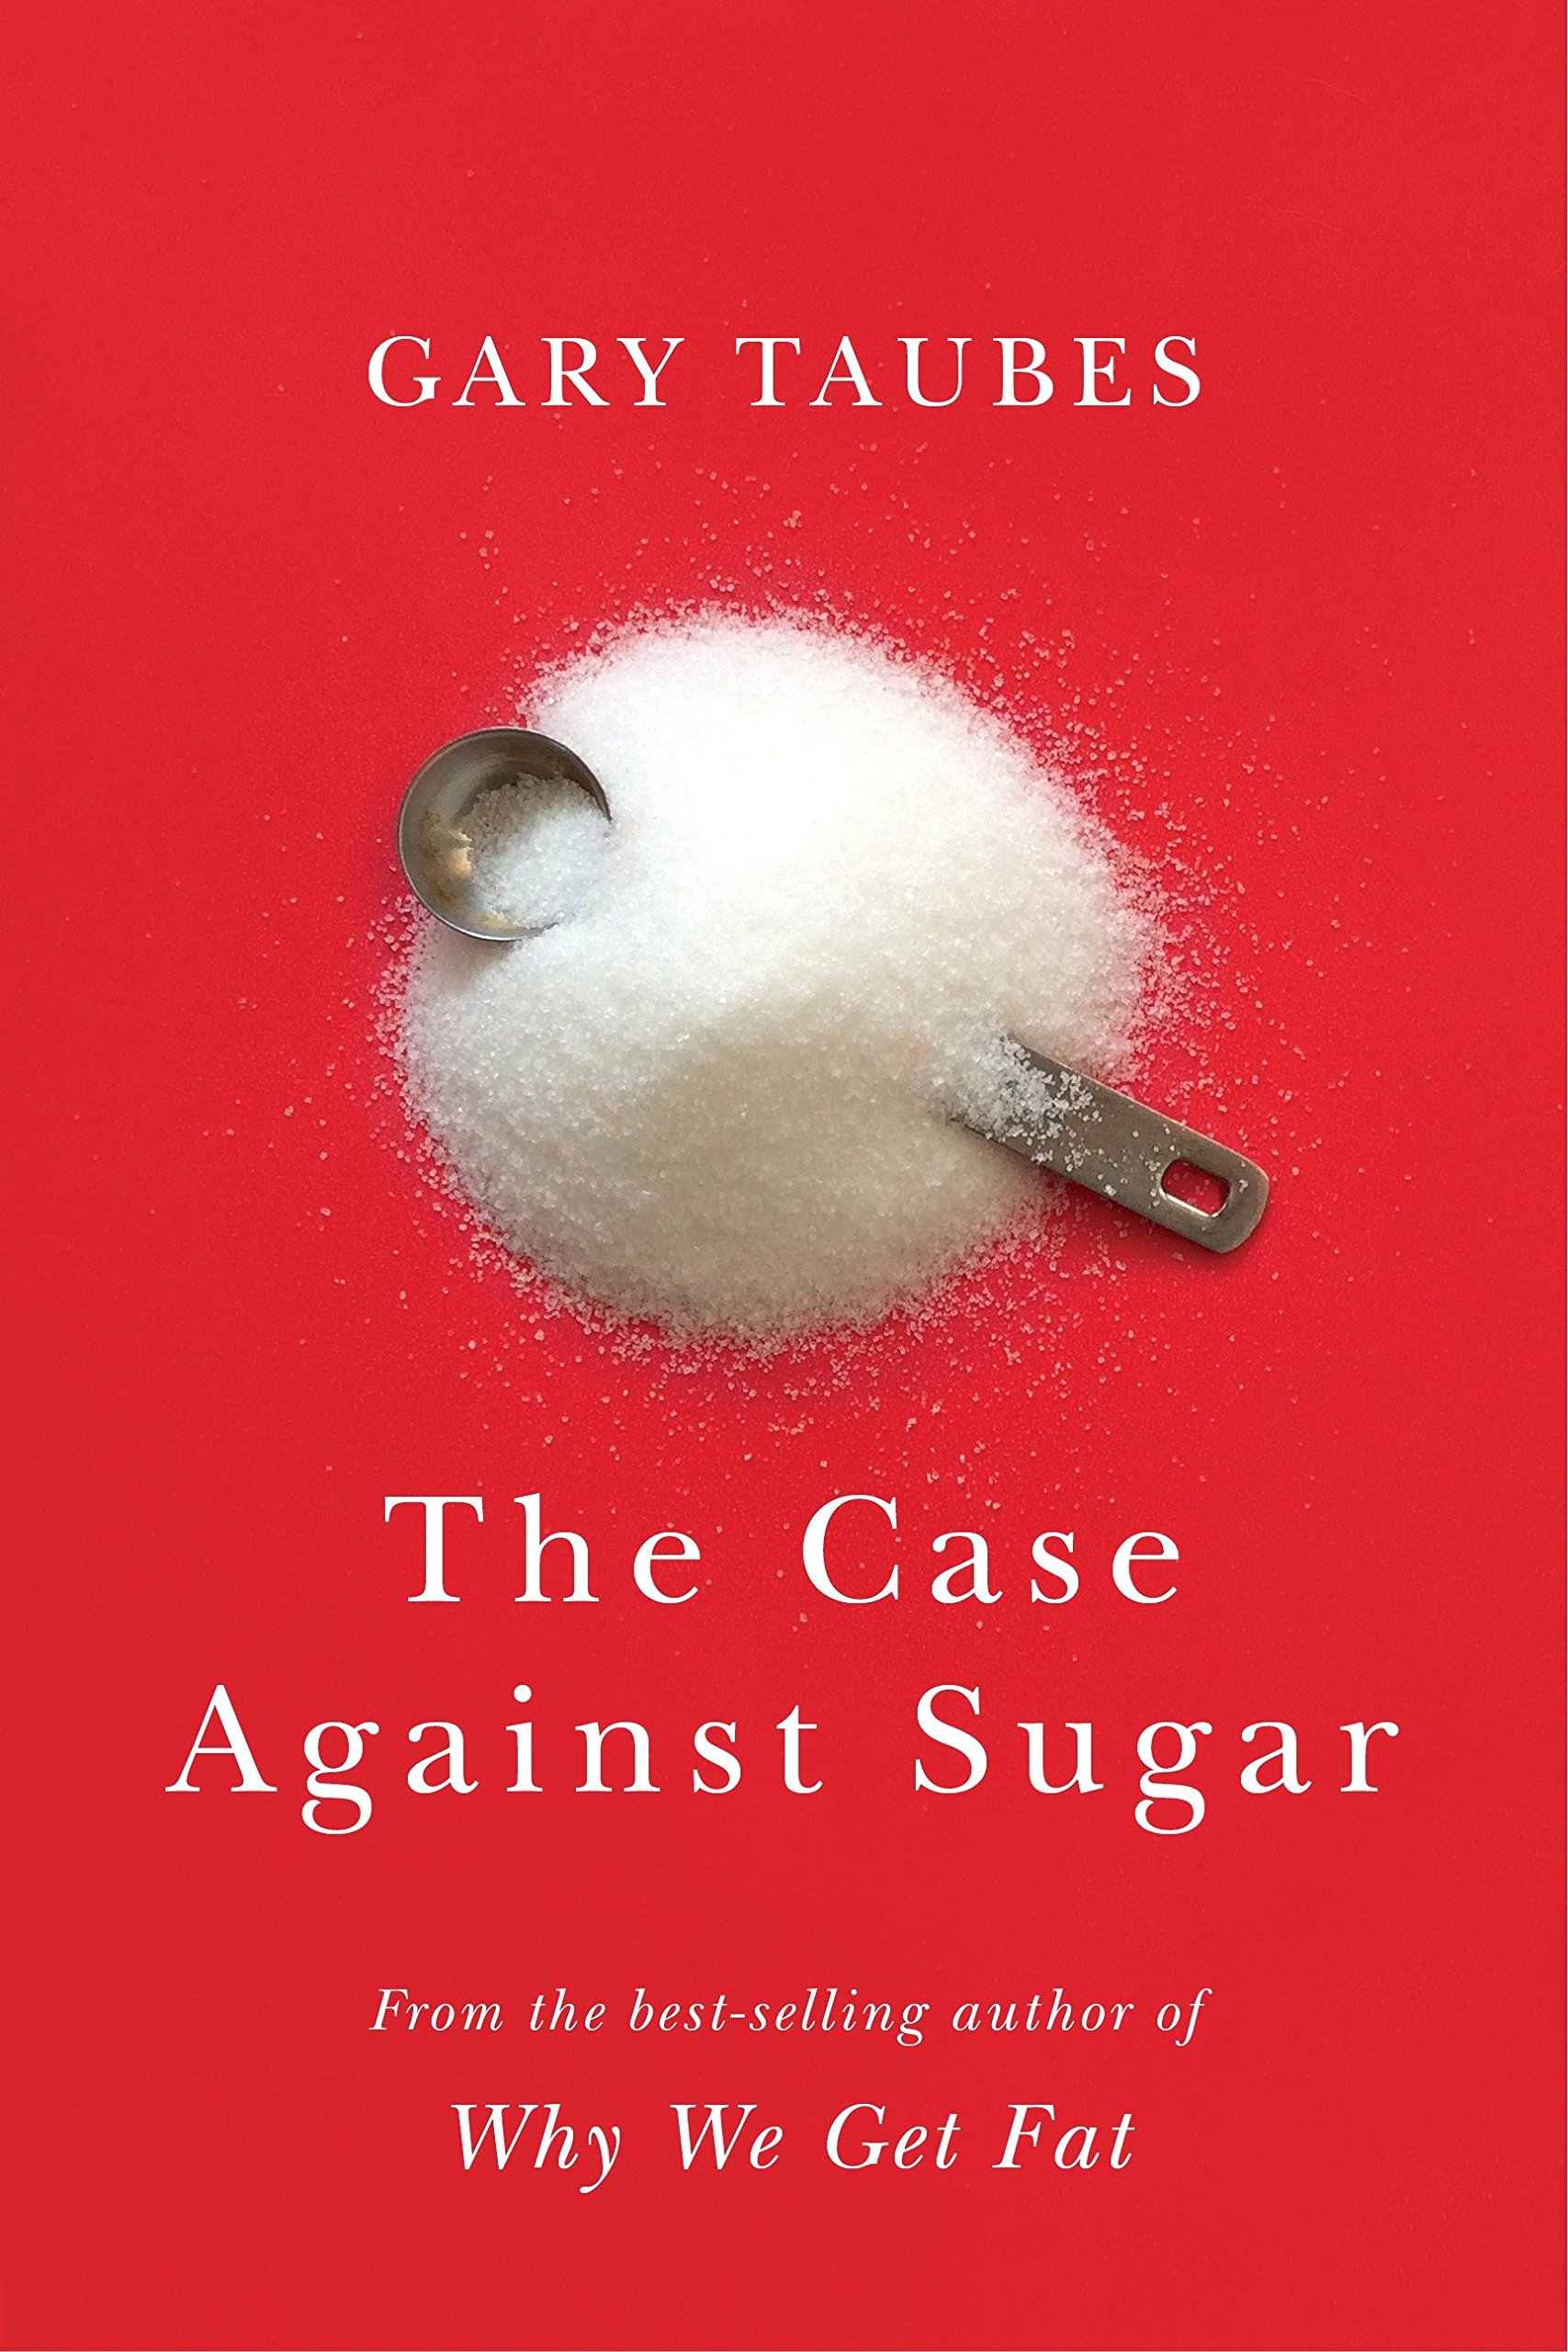 carlos velo the case against sugar Gay Taubes